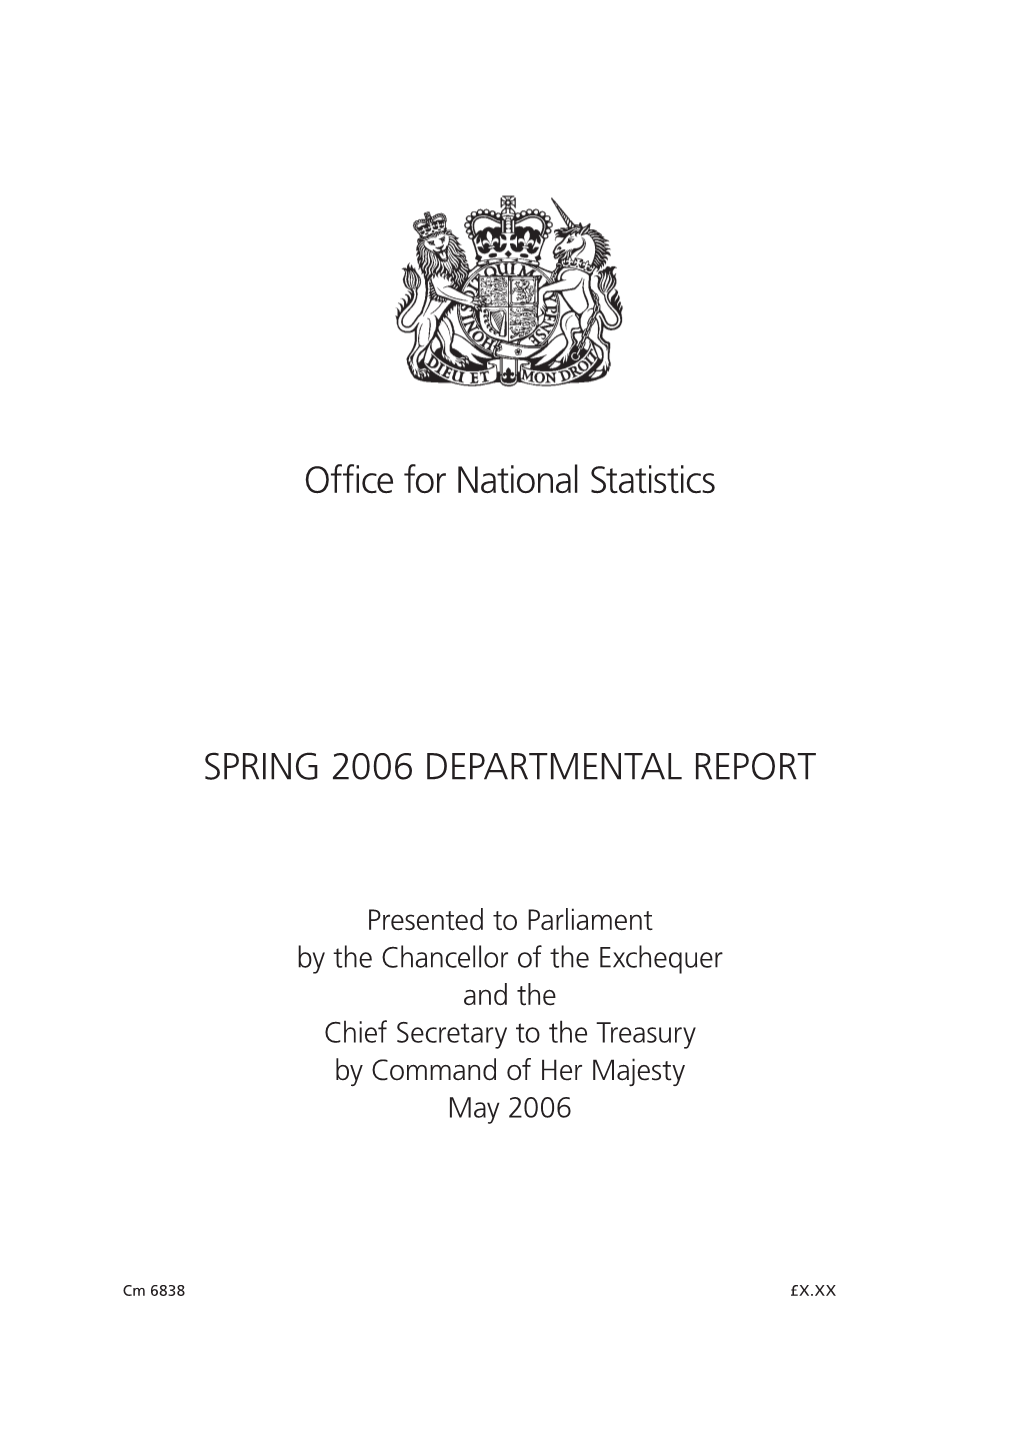 Office for National Statistics Spring 2006 Departmental Report CM 6838